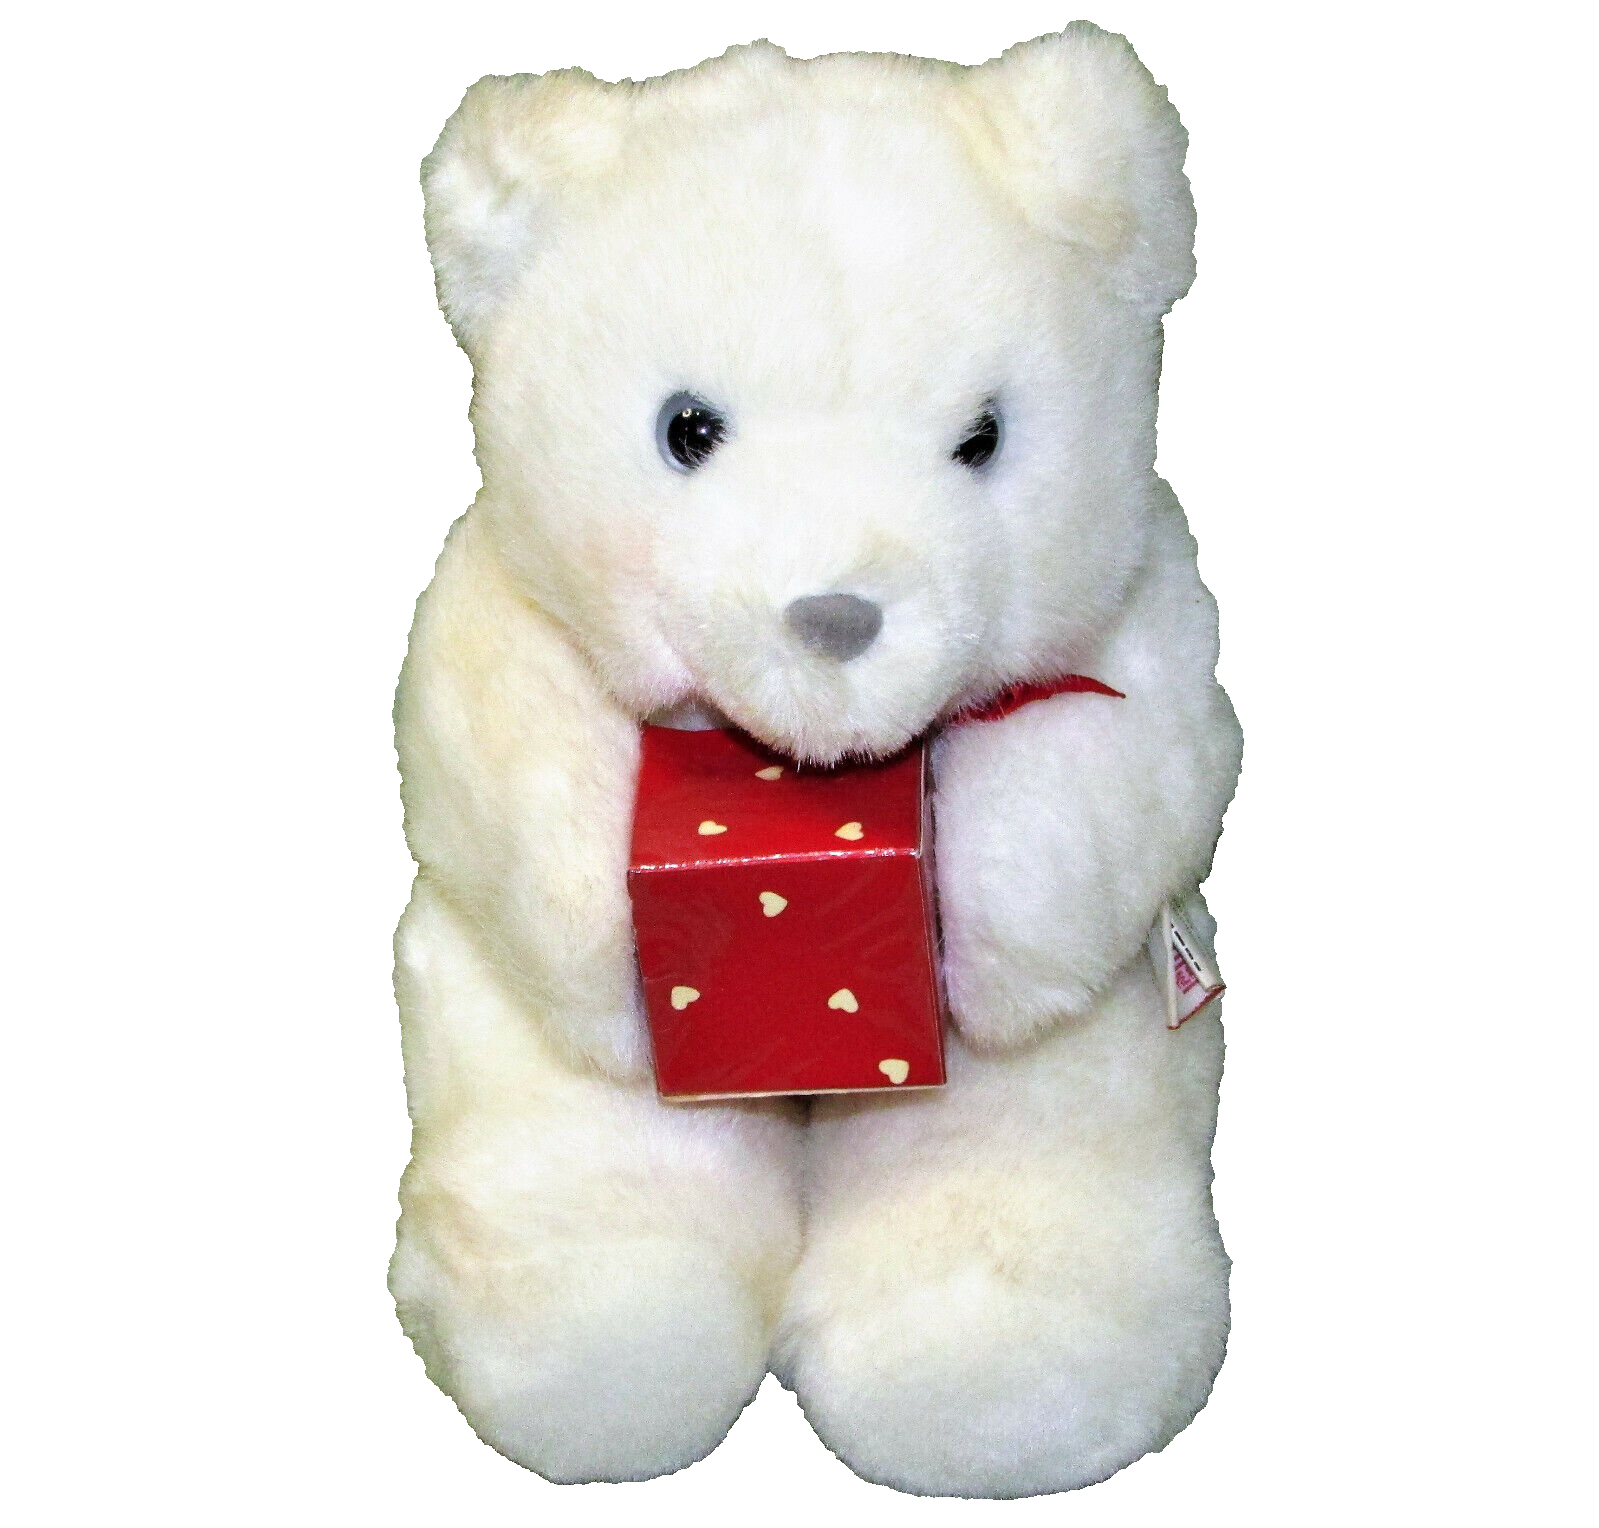 VINTAGE HEARTLINE TEDDY BEAR 1989 HALLMARK STUFFED ANIMAL with RED HEART BOX TOY - $9.45